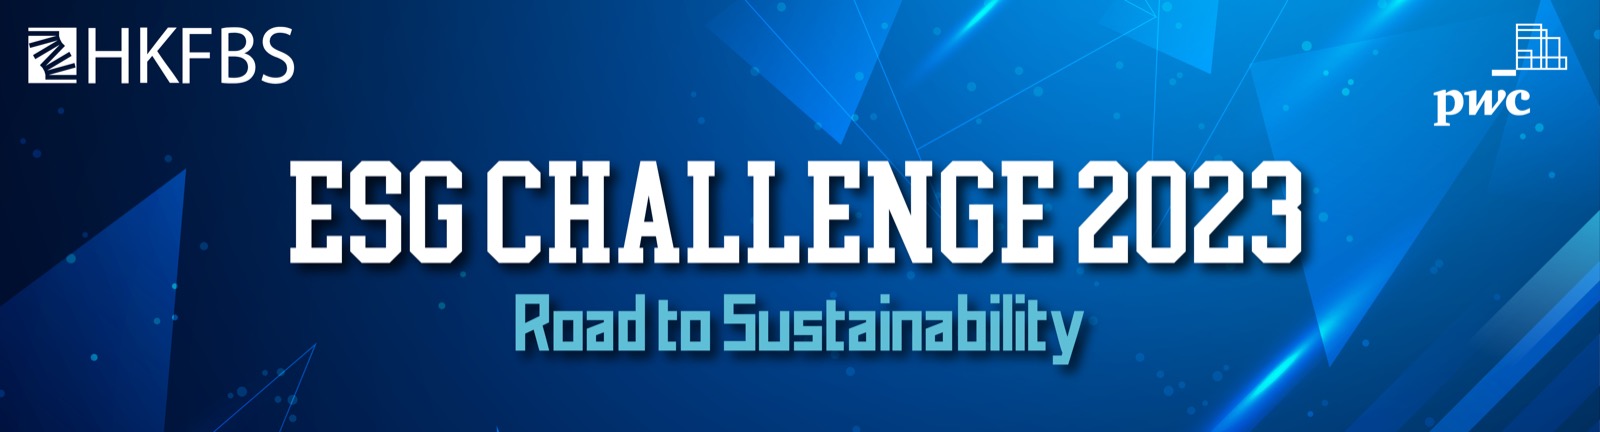 About ESG Challenge 2023